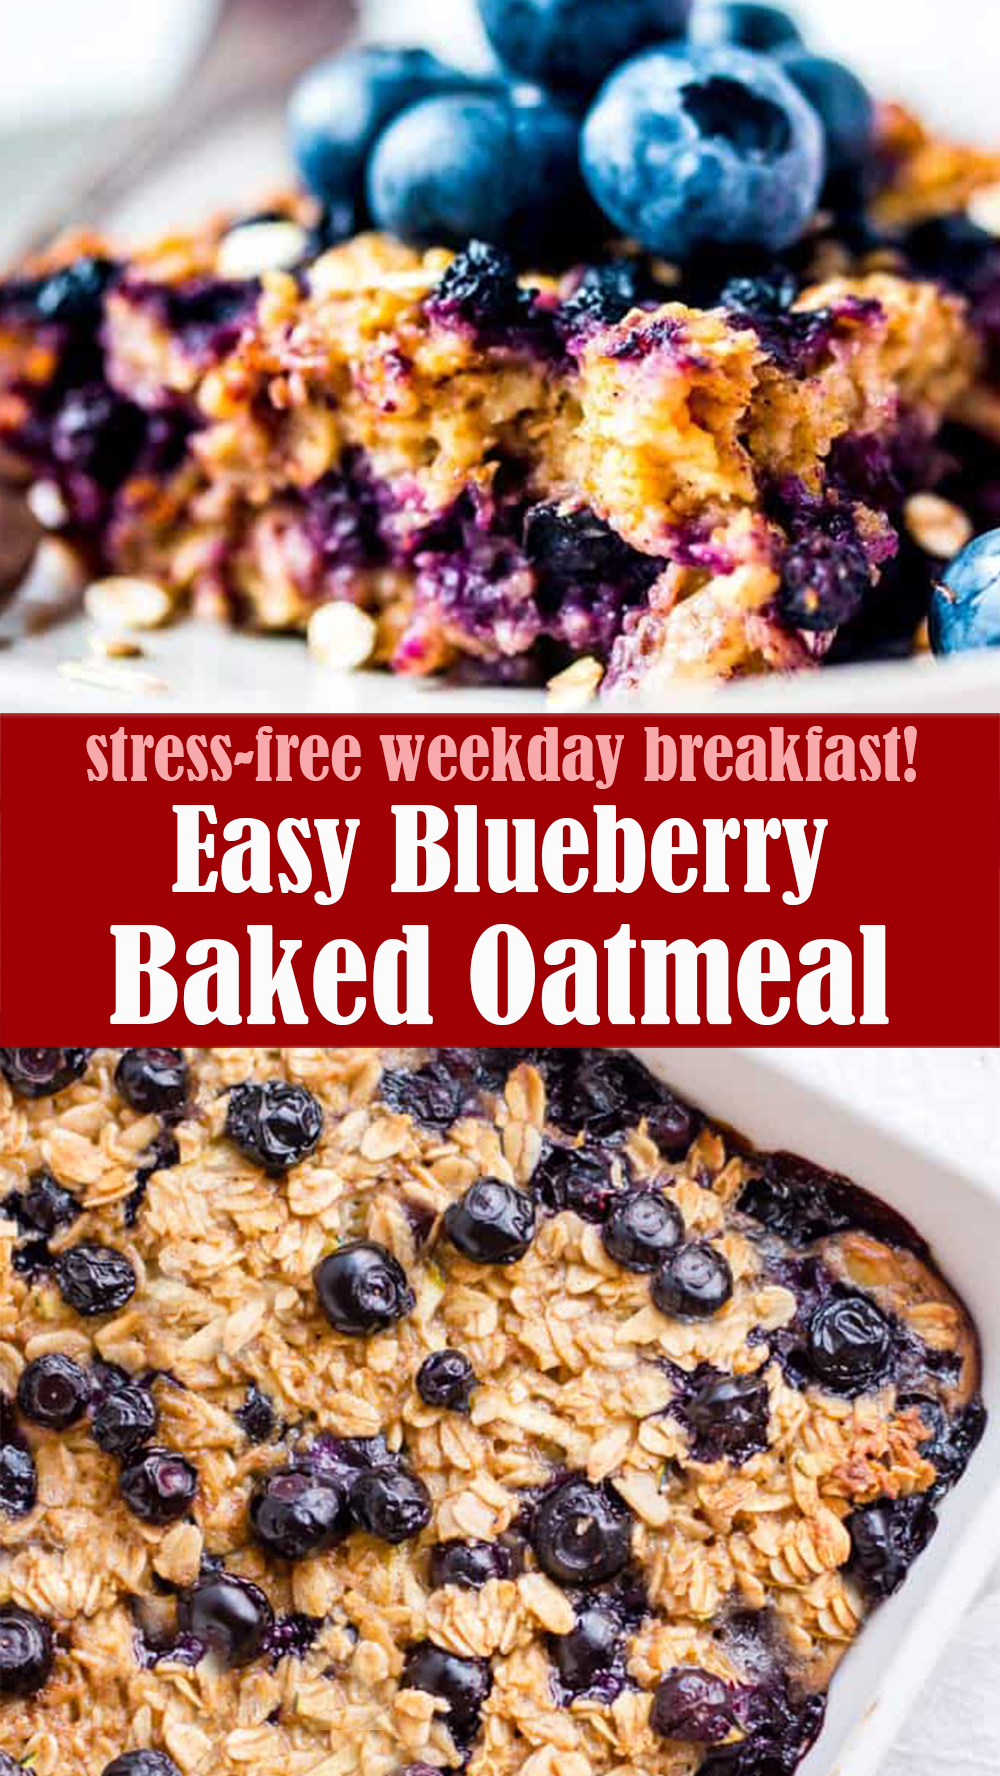 Easy Blueberry Baked Oatmeal